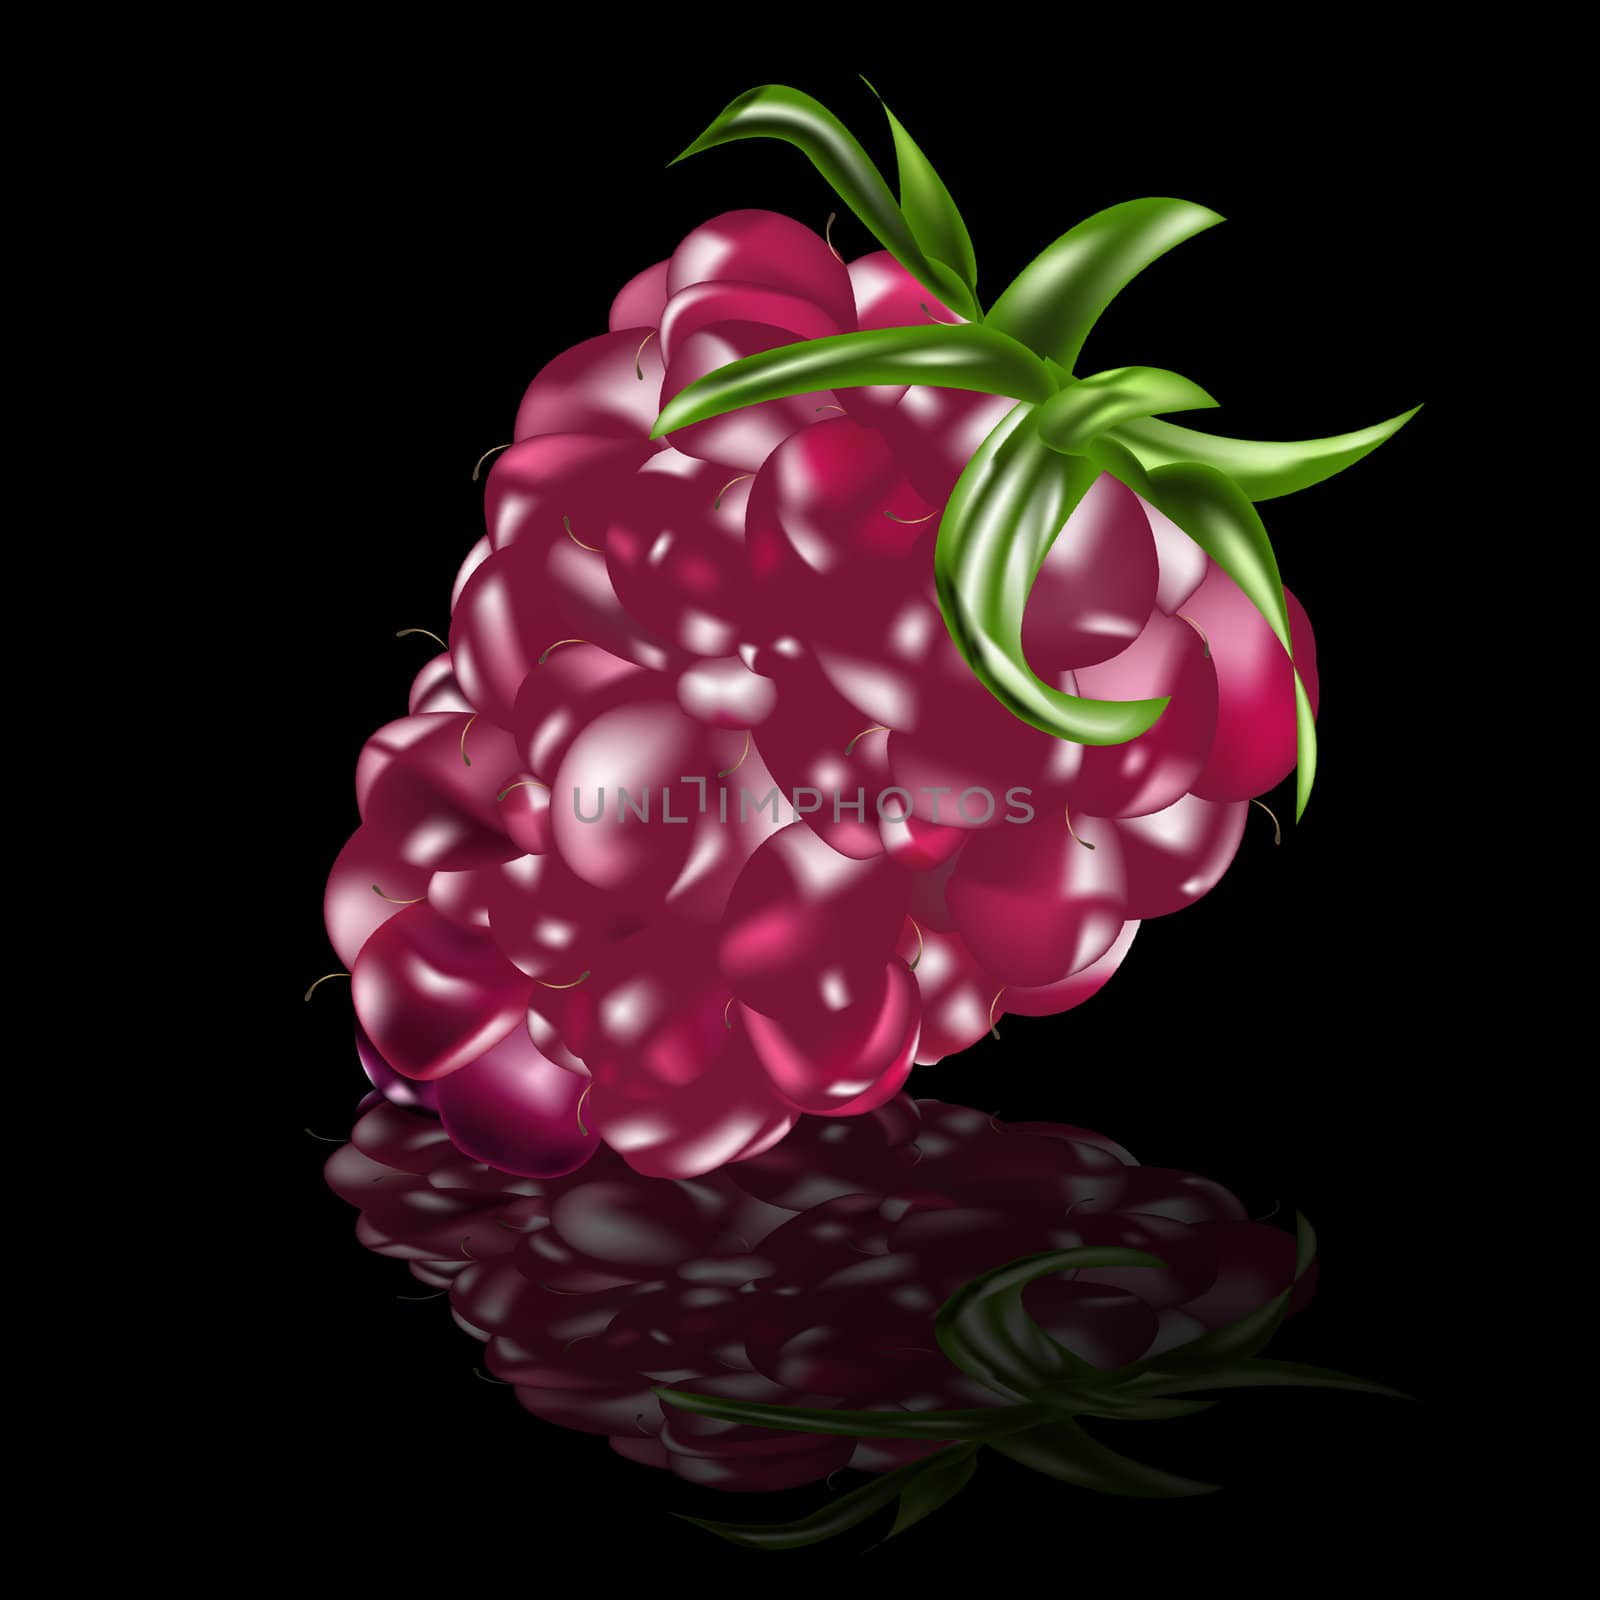 Raspberry on a black background